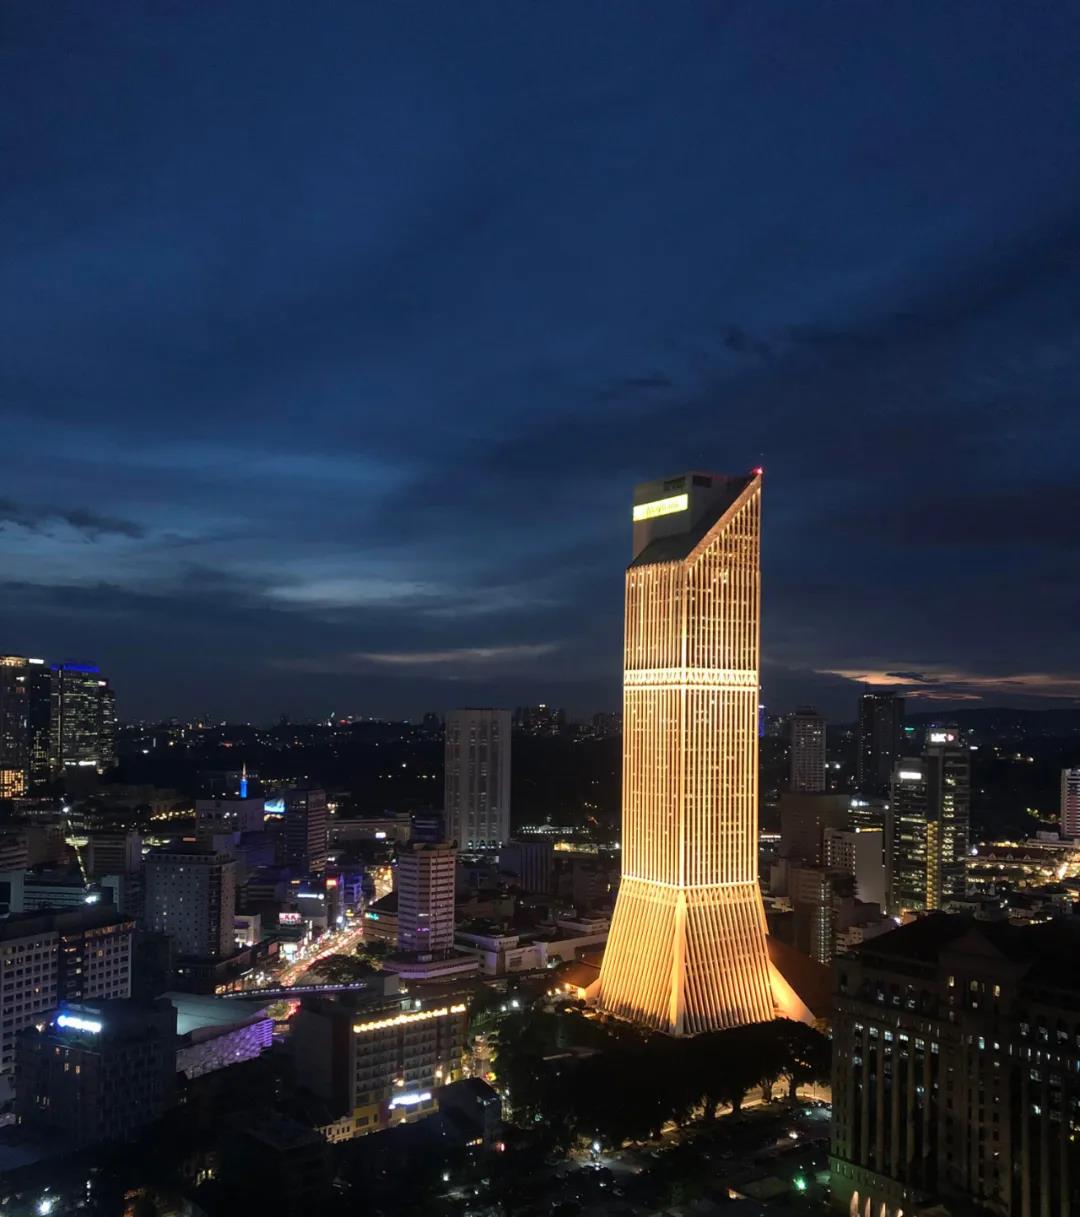 SHYLON 芯龙光电案例精选马来西亚 Maybank Tower01保罗·利科之问当邓丽君的歌声吹拂过1984年吉隆坡的夜空这片独立近27年的土地和她的人民或...